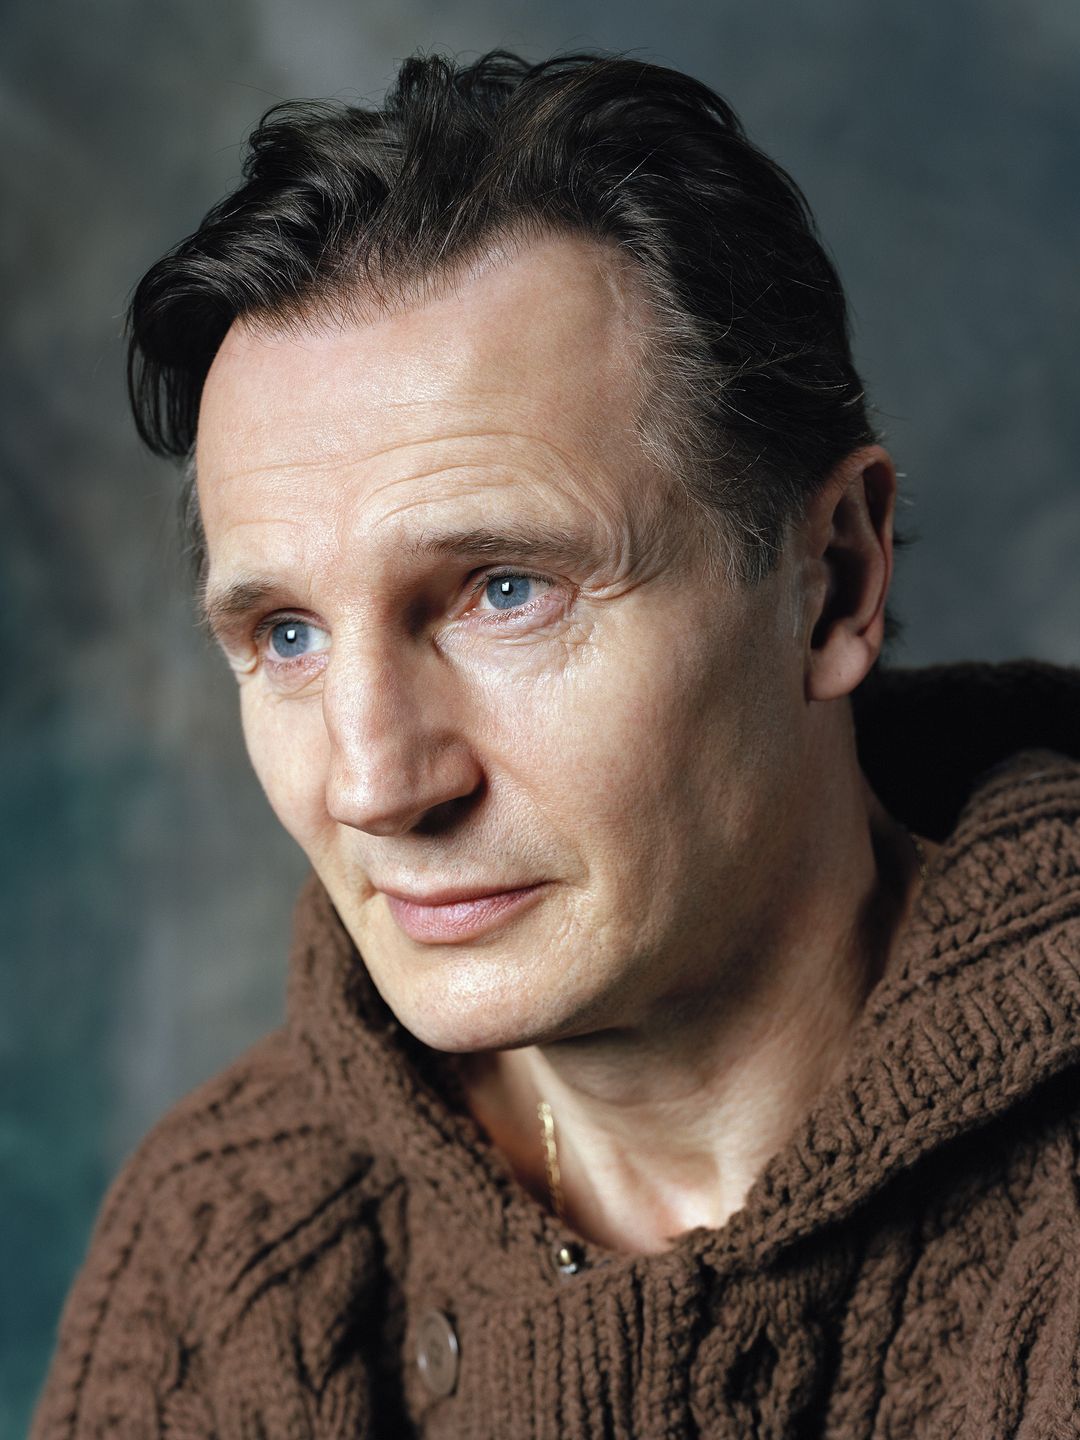 Liam Neeson main achievements